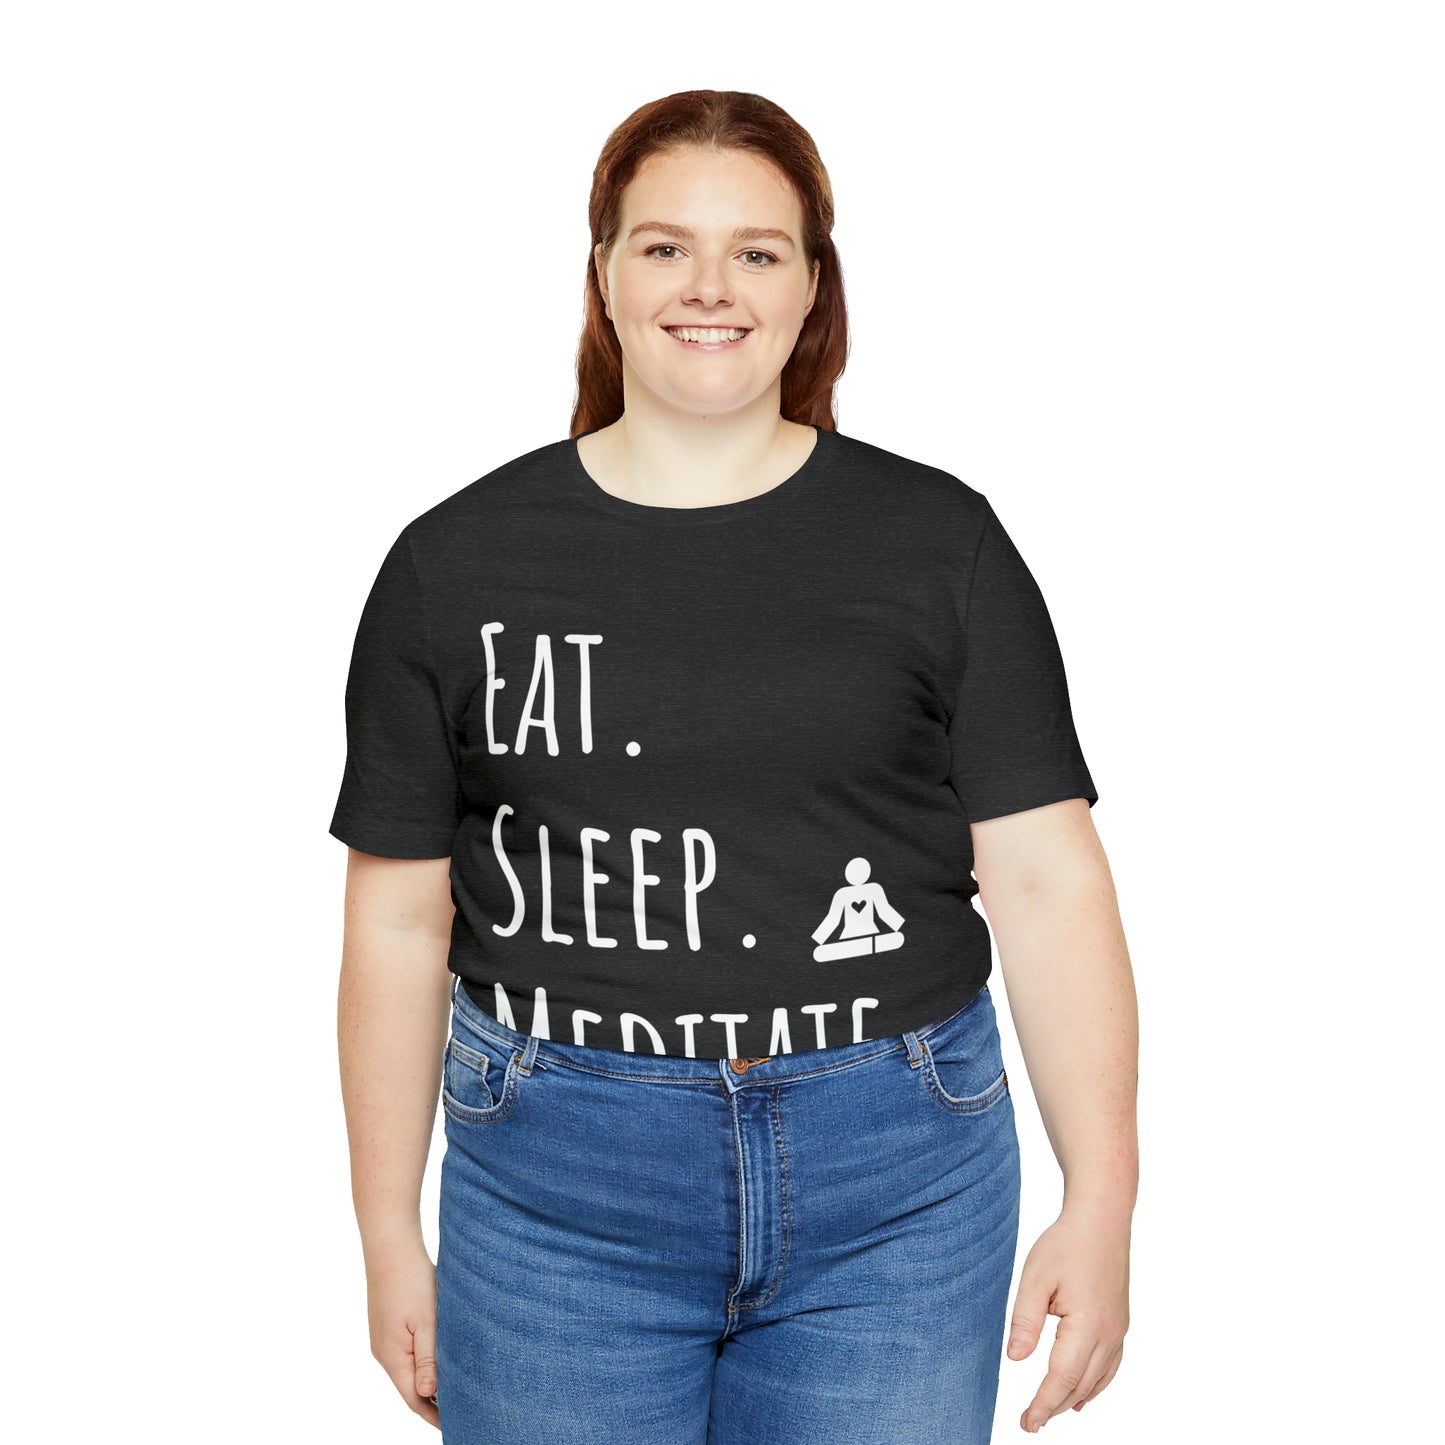 Eat. Sleep. Meditate. T-Shirt - Arjuna Rigby Art and Lifestyle Store